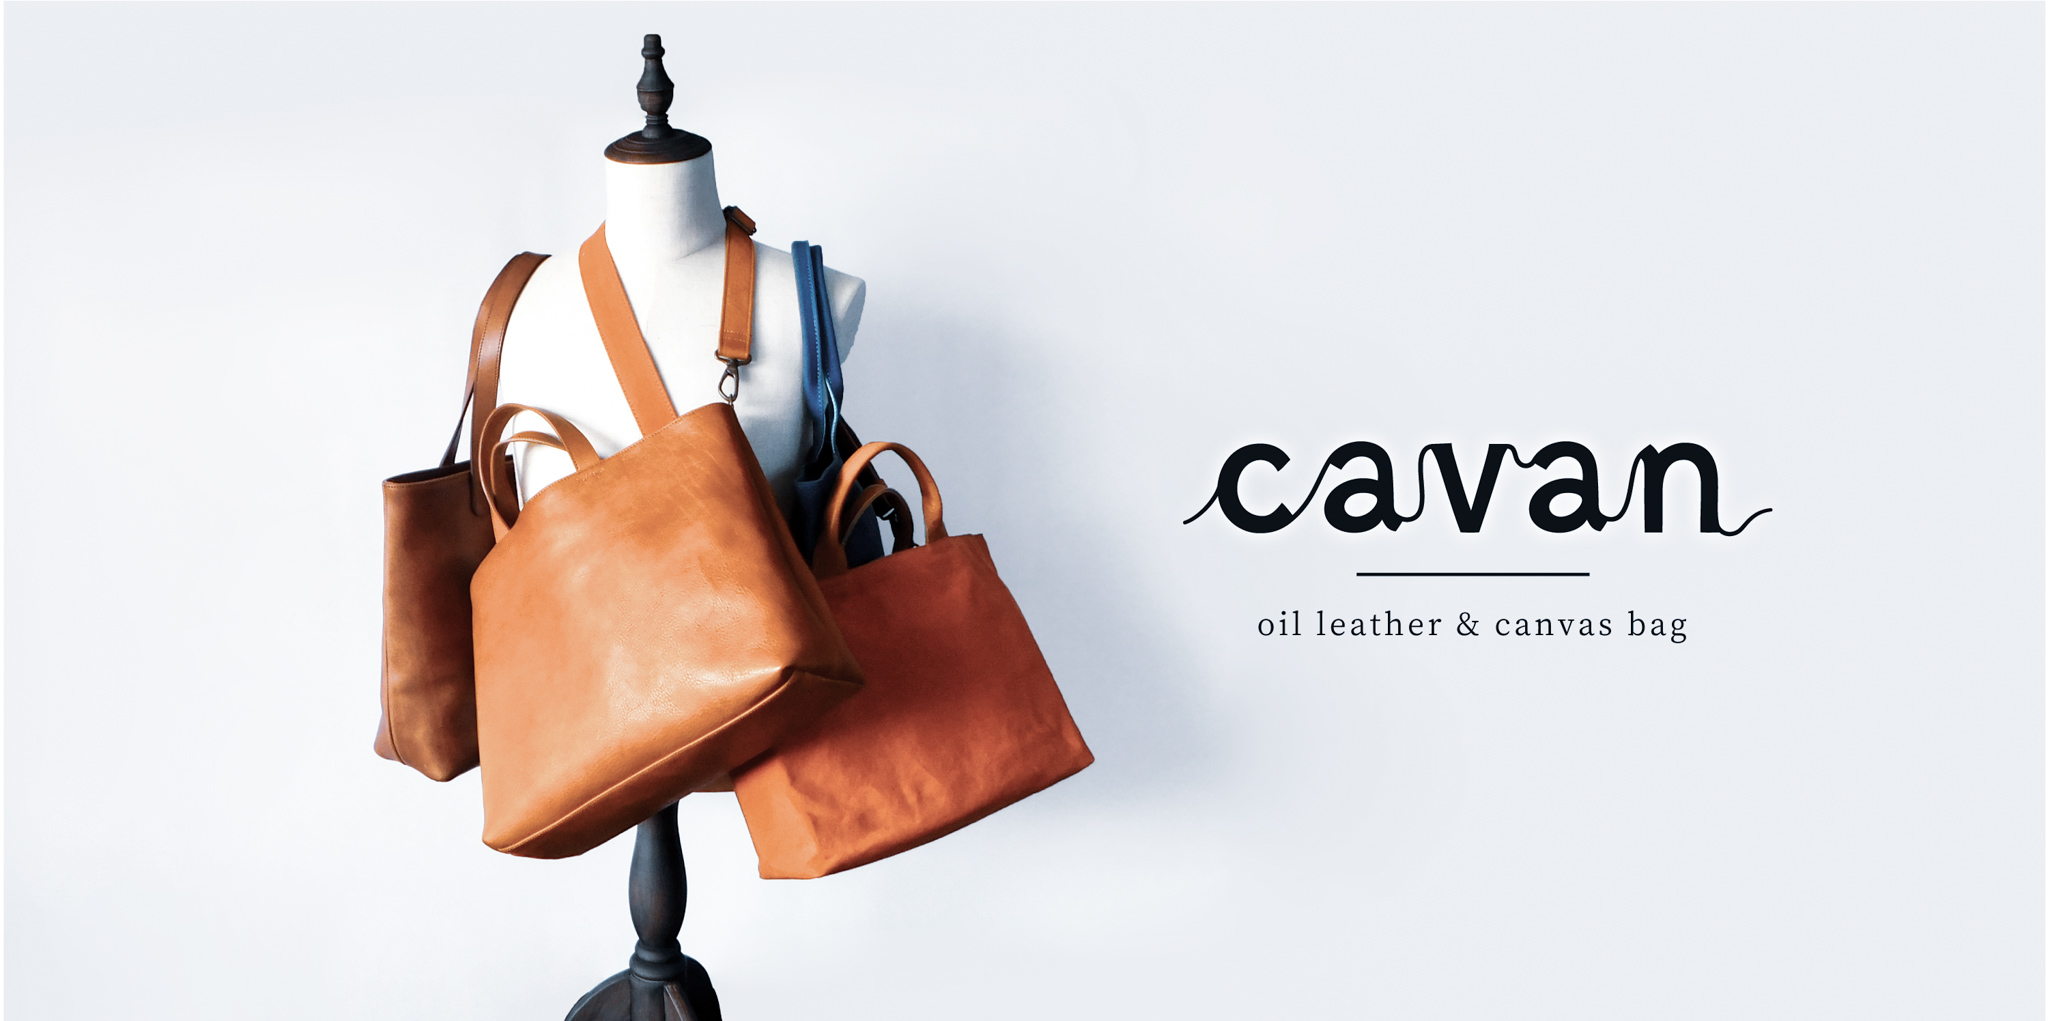 cavan oil leather & canvas bag